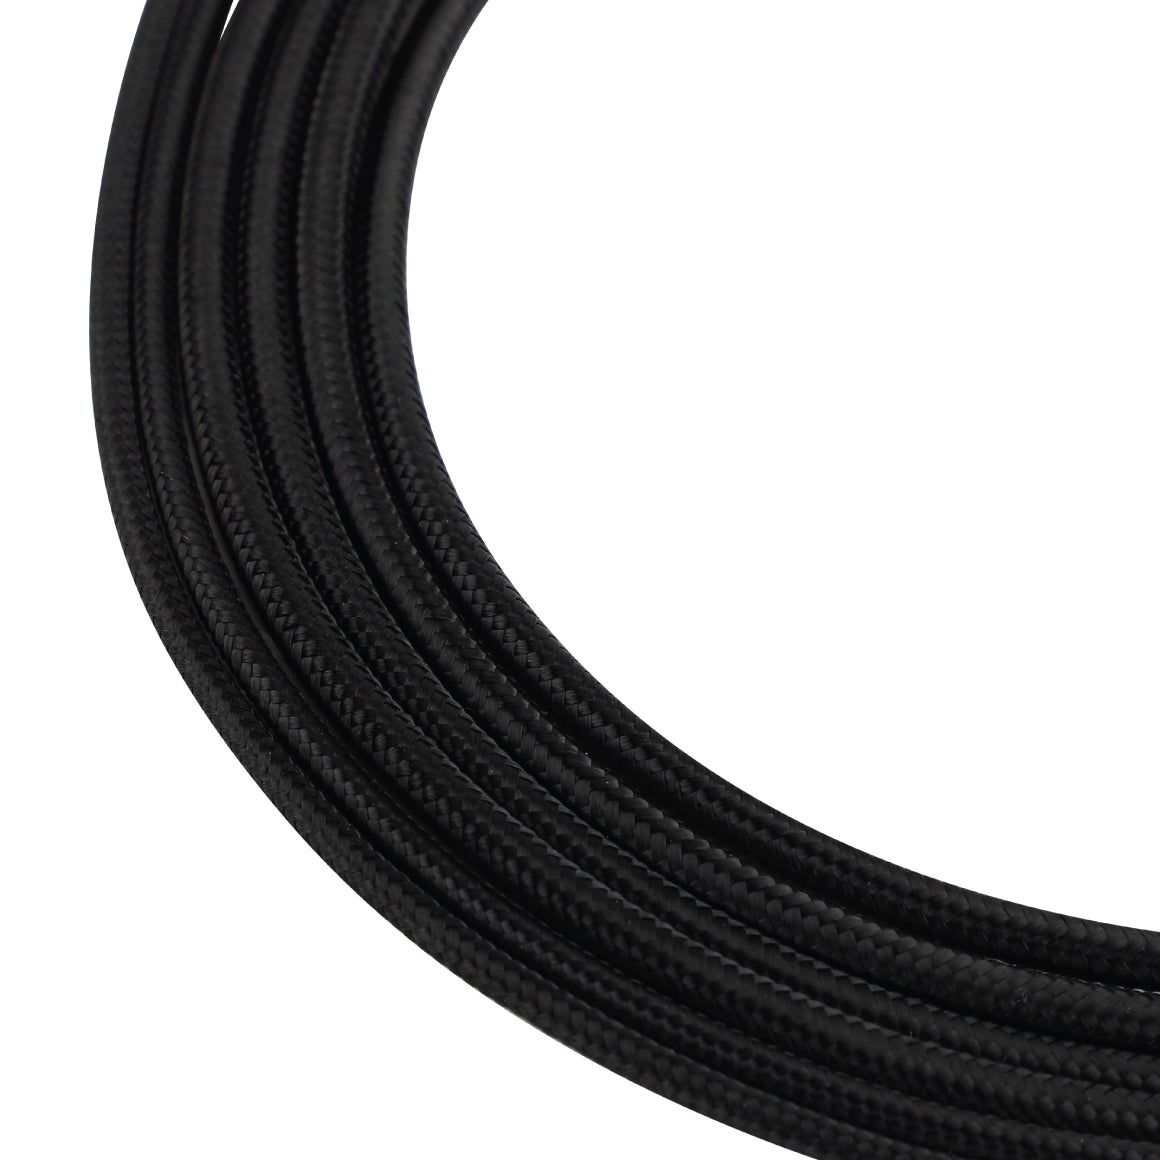 Headphone-Zone-SIVGA-Headphone-Cable-for-Robin-_SV021_-3.5mm-Black